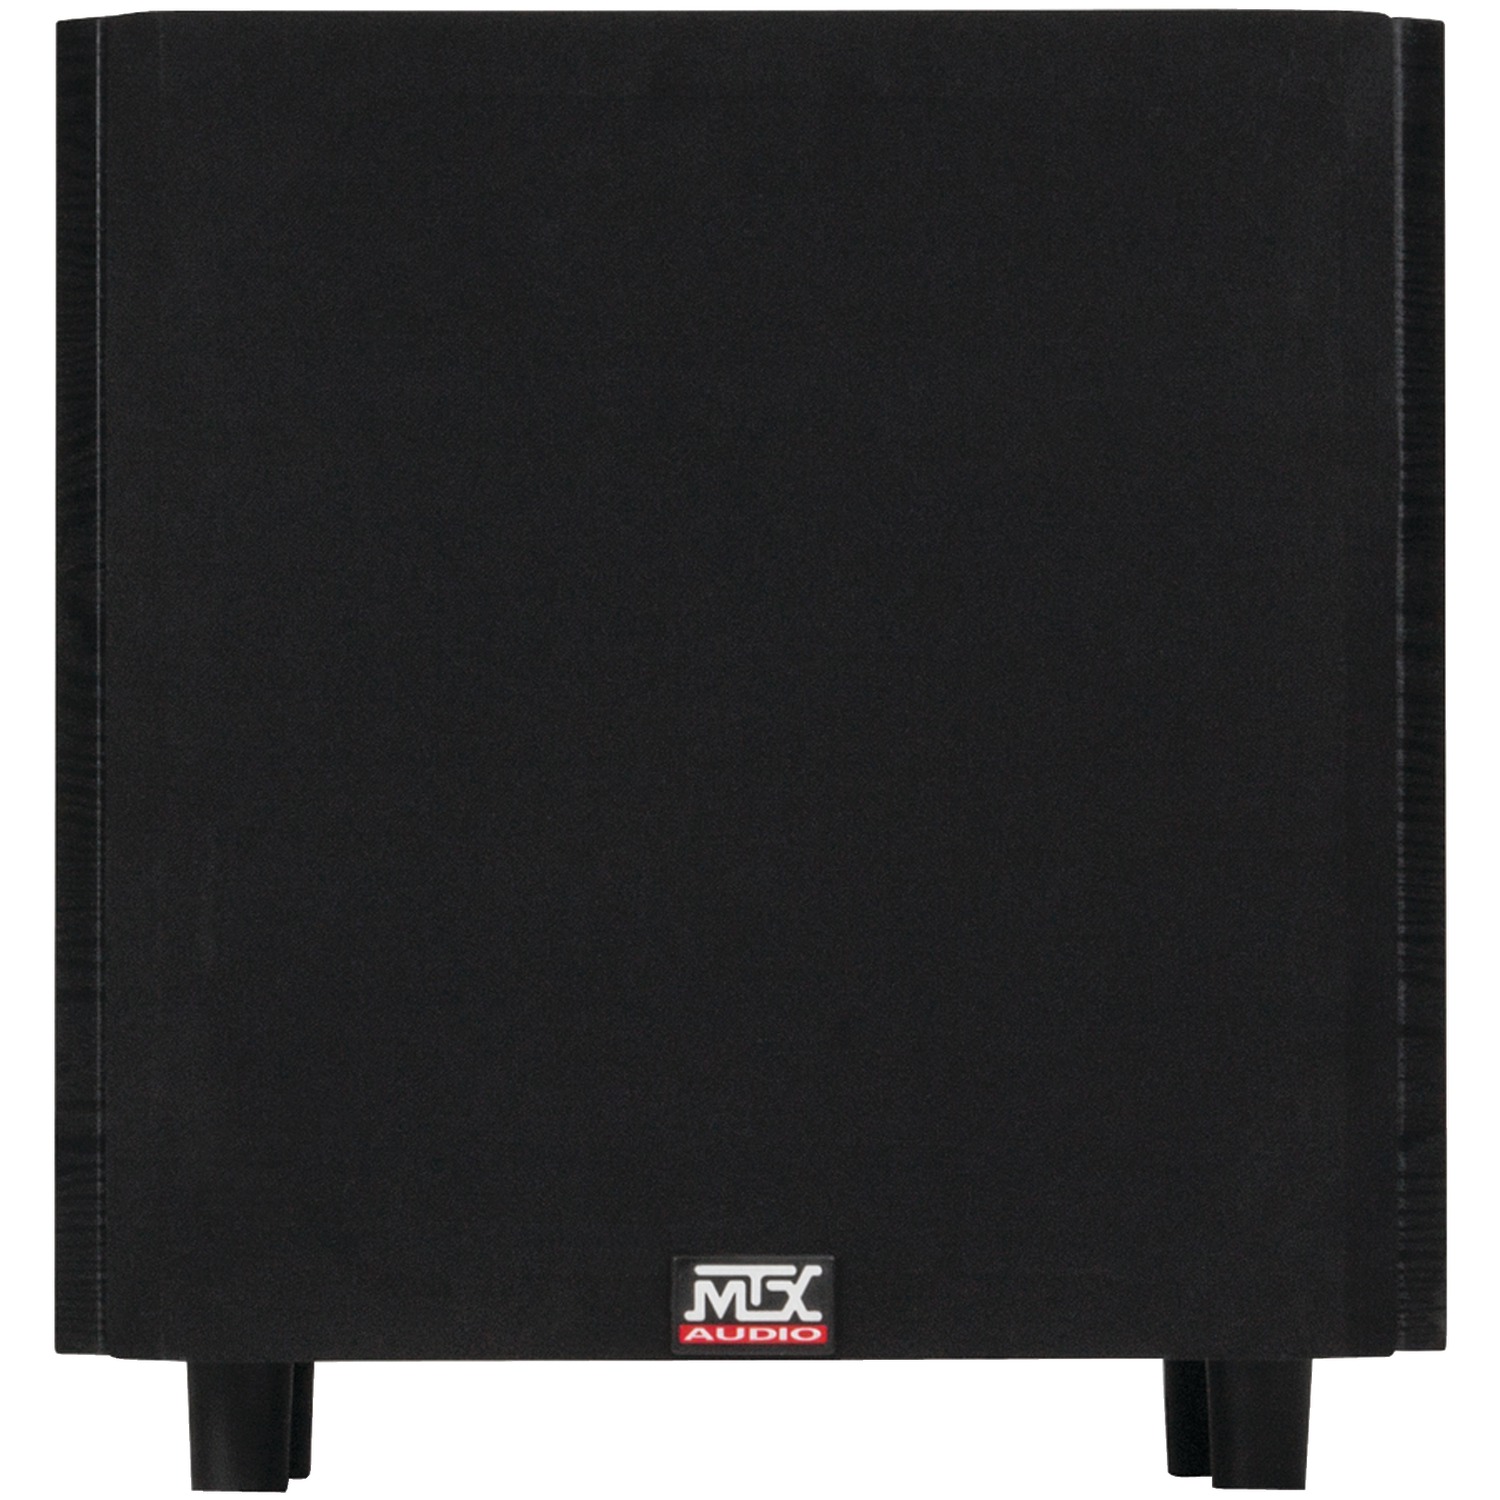 MTX AUDIO(R) TSW10 MTX - 10" 150W Powered Subwoofer - Black ash vinyl